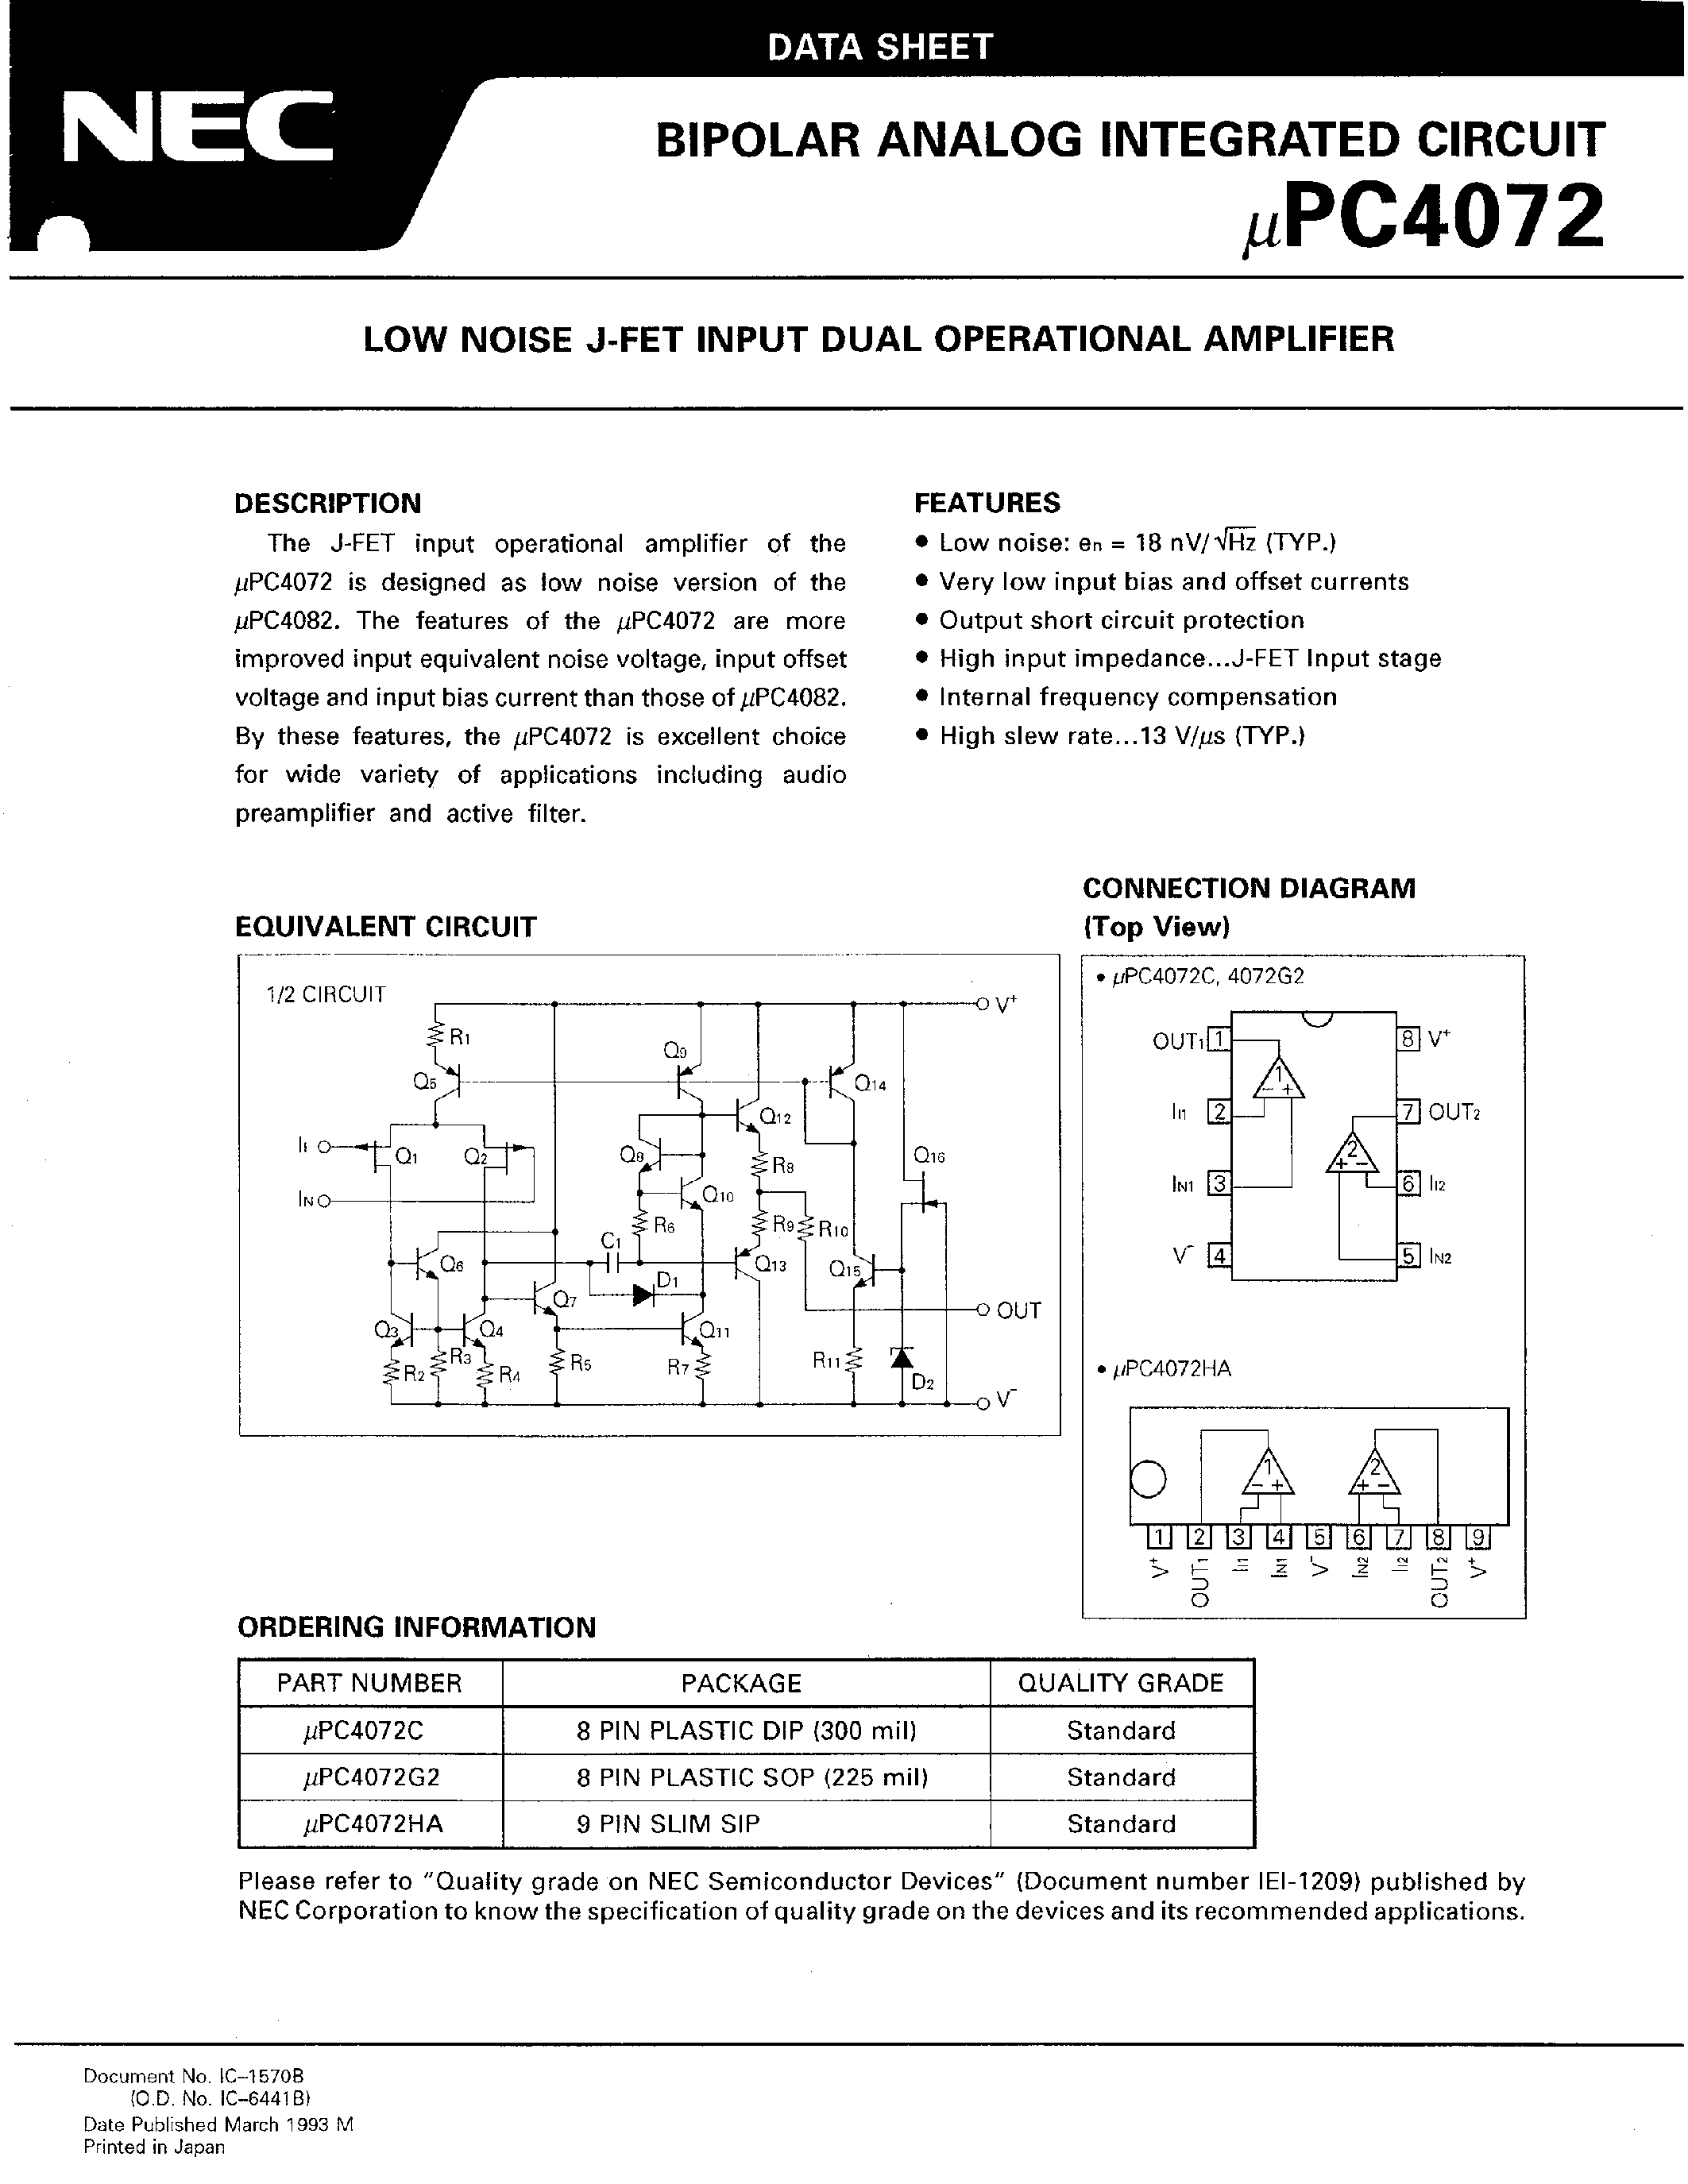 Datasheet UPC4072G2 - LOW NOISE J-FET INPUT DUAL OPERATIONAL AMPLIFIER page 1